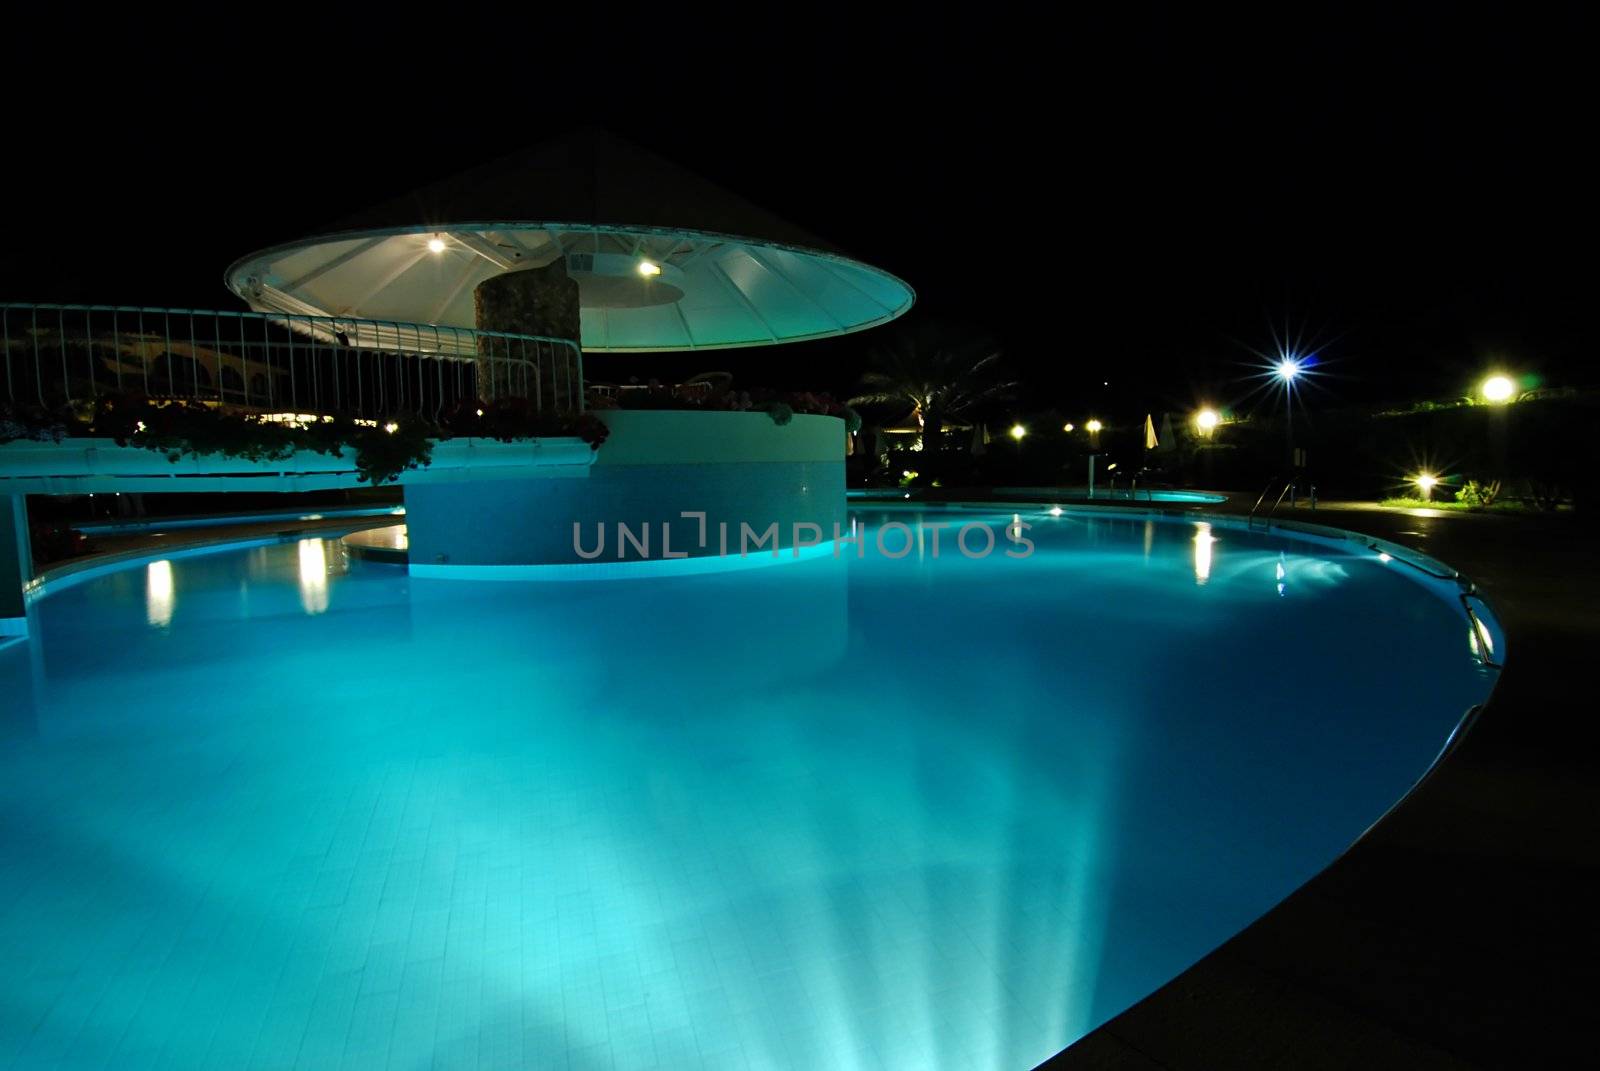 Swimming pool at night illuminated by lamps